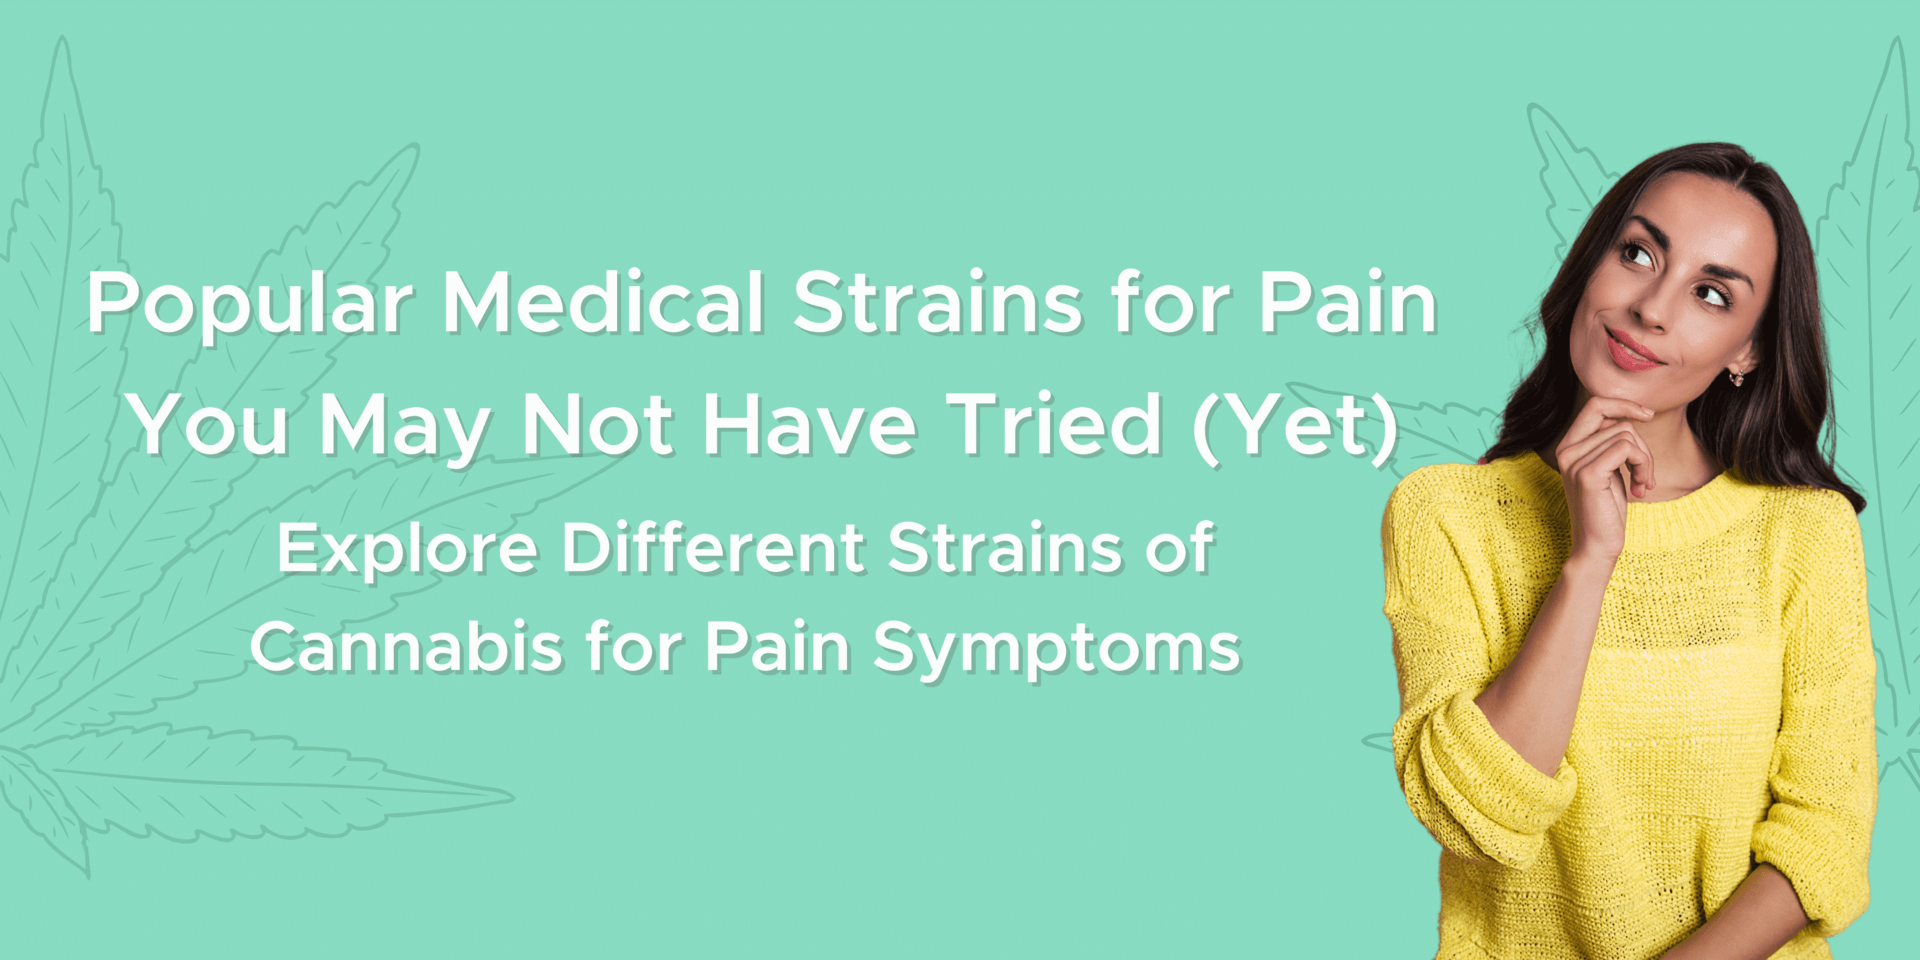 Chronic Pain,Medical Cannabis,MMJ,Marijuana for Pain